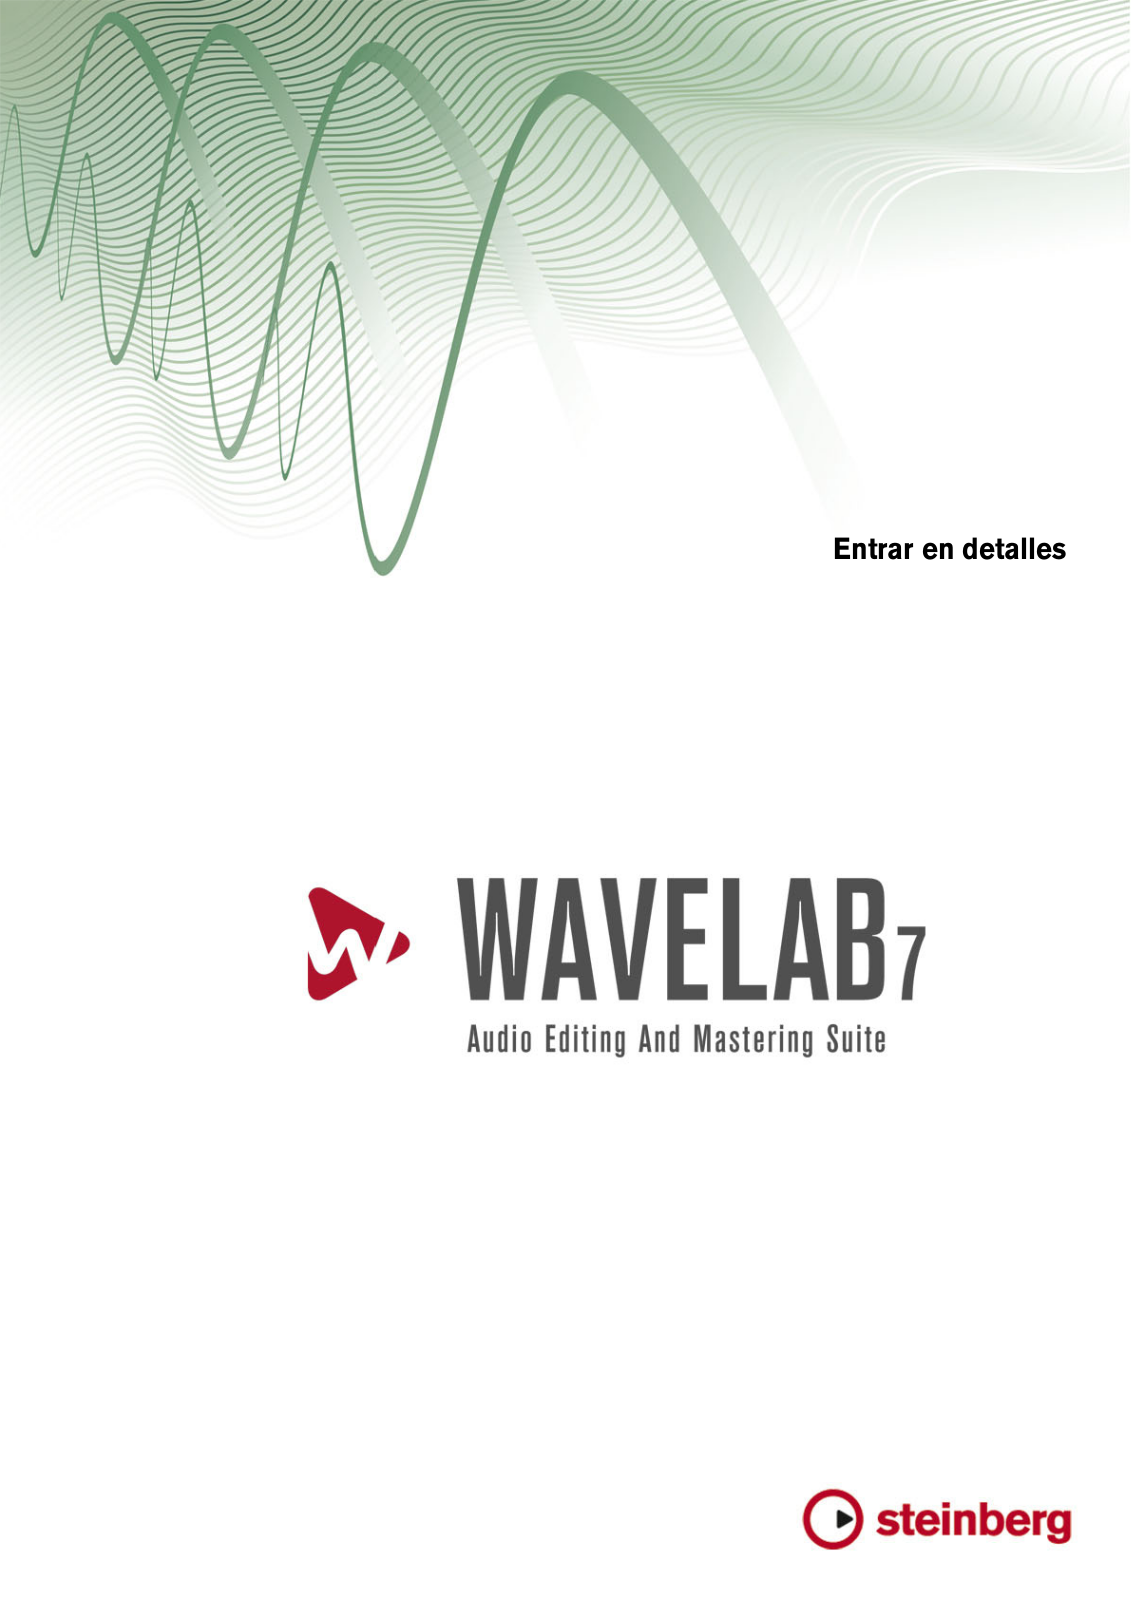 wavelab 7 picture